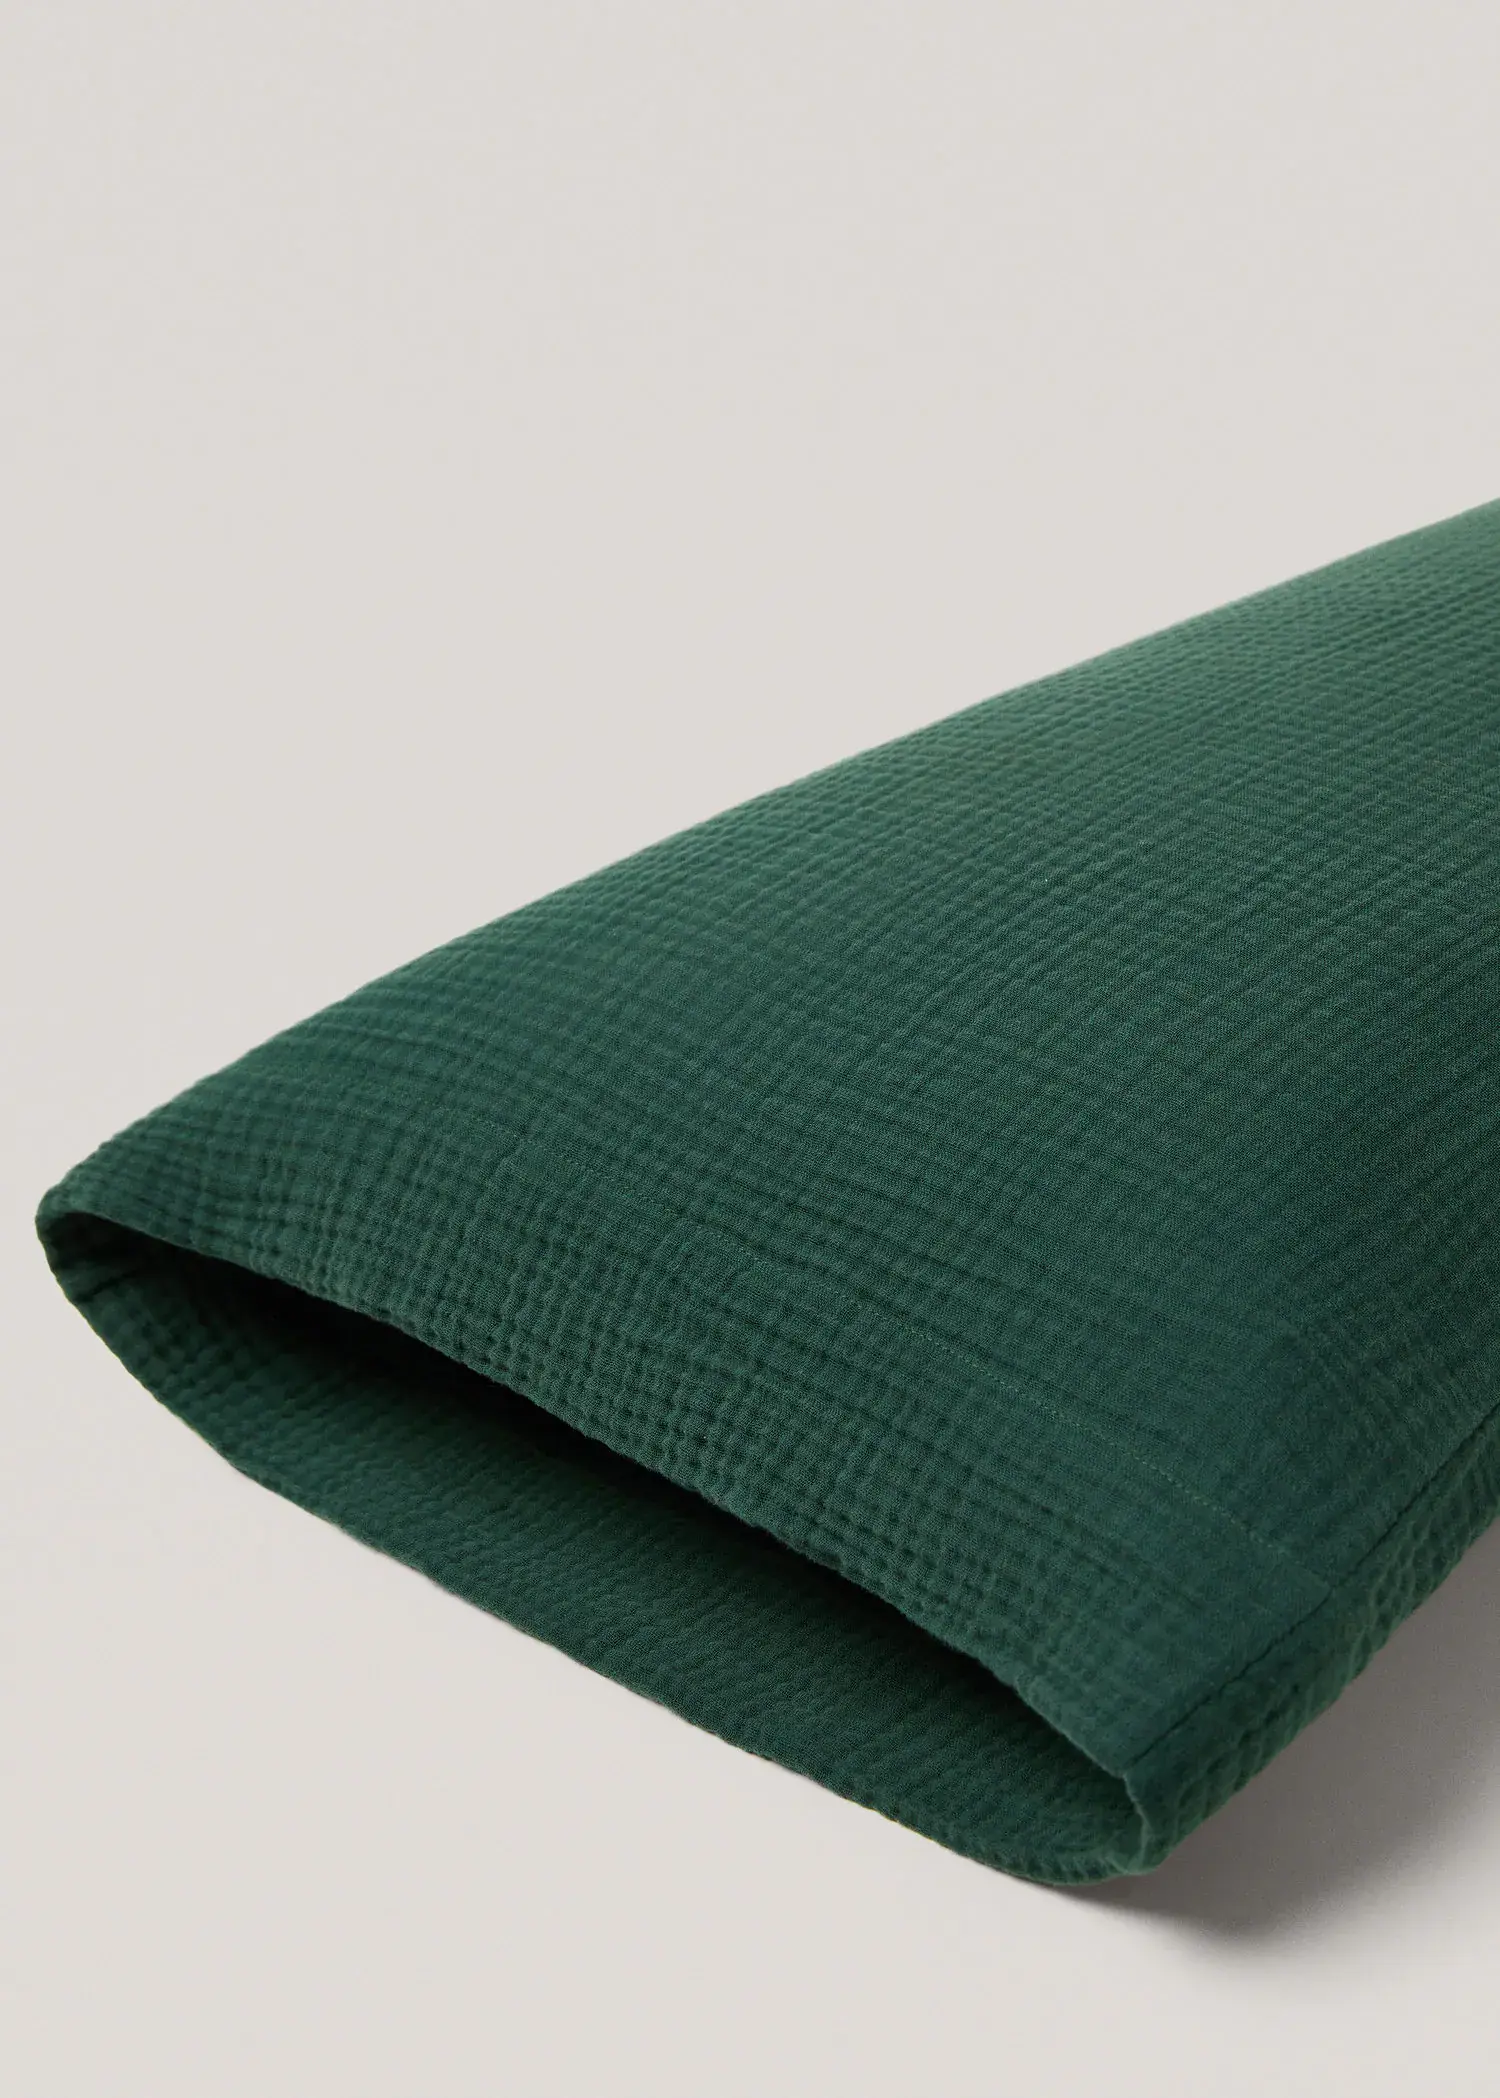 Mango Funda de almohada gasa algodón 45x110cm. 2